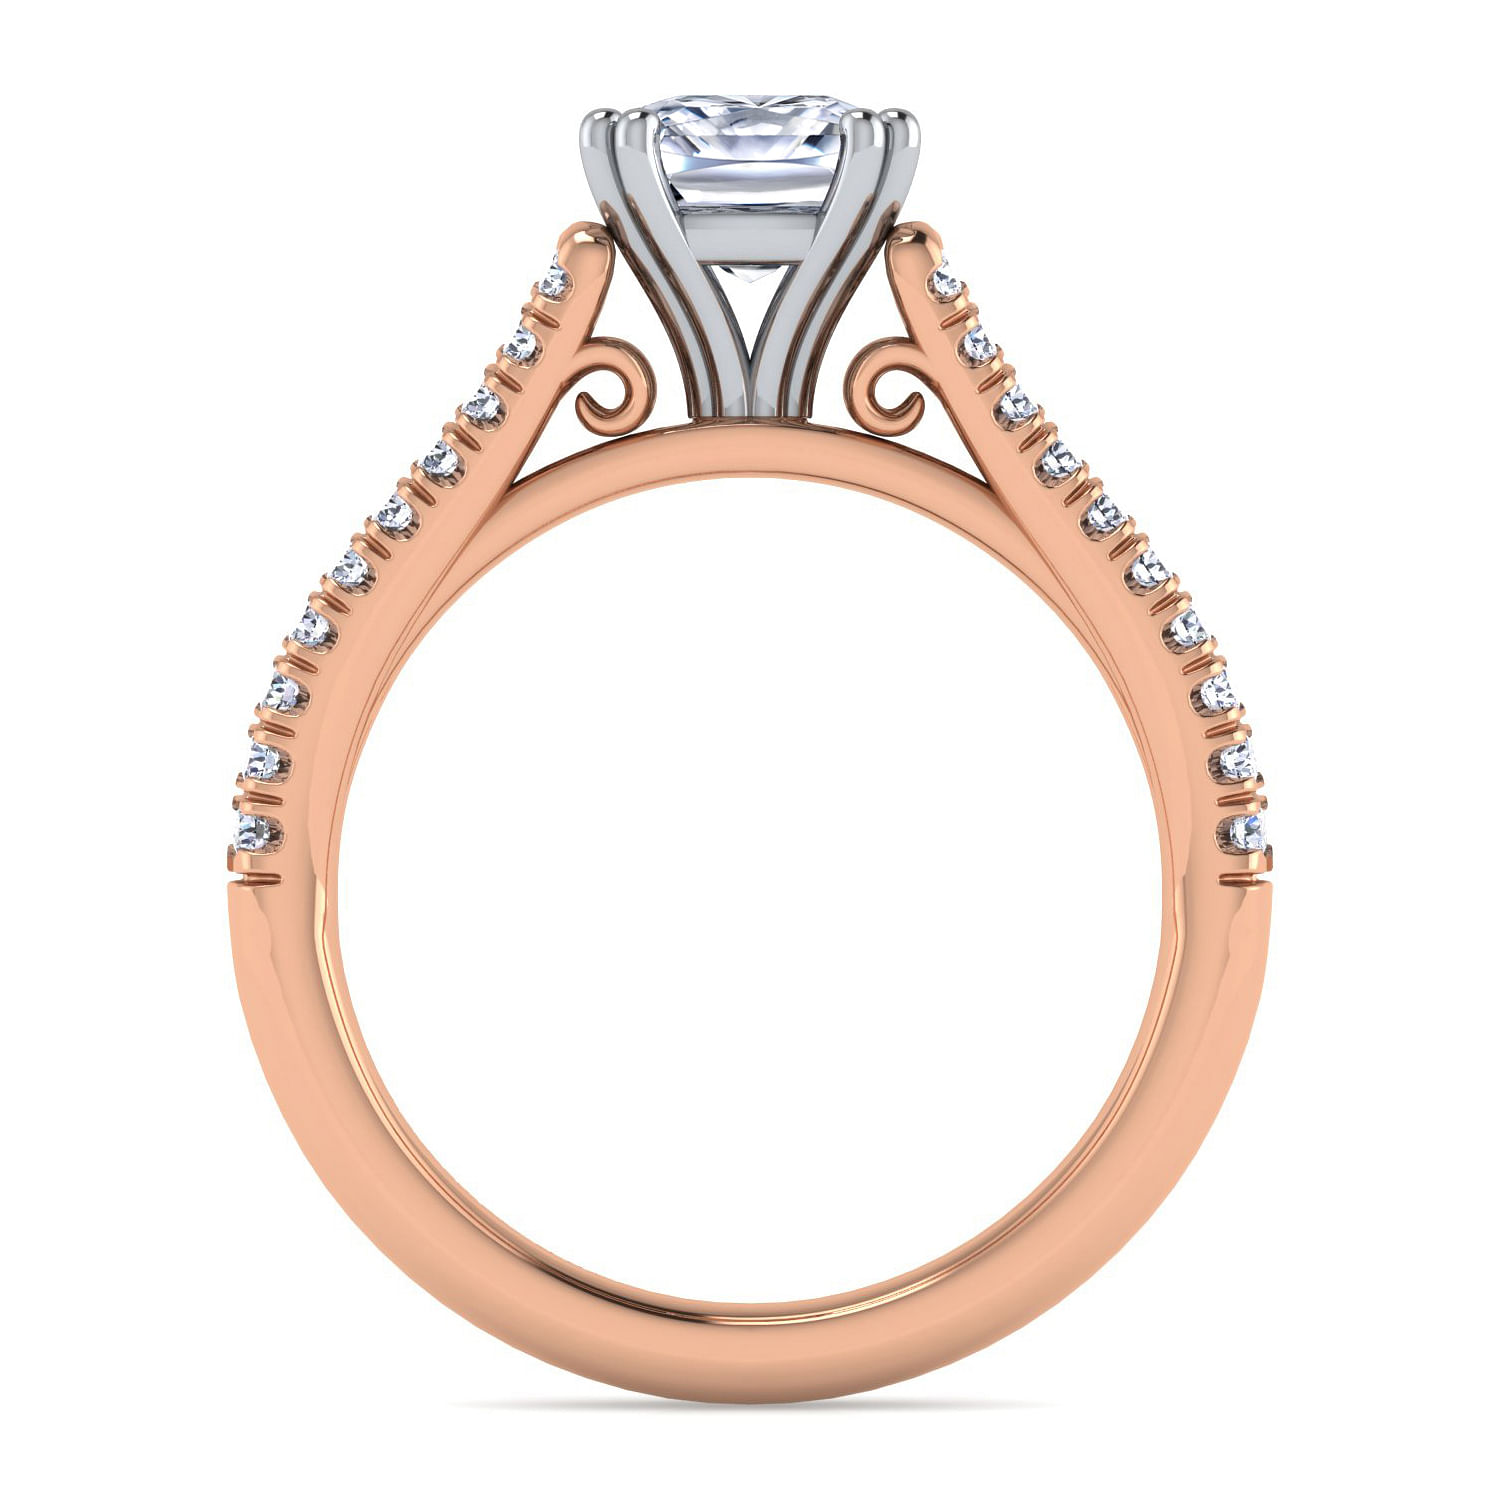 14K White-Rose Gold Cushion Cut Split Shank Diamond Engagement Ring